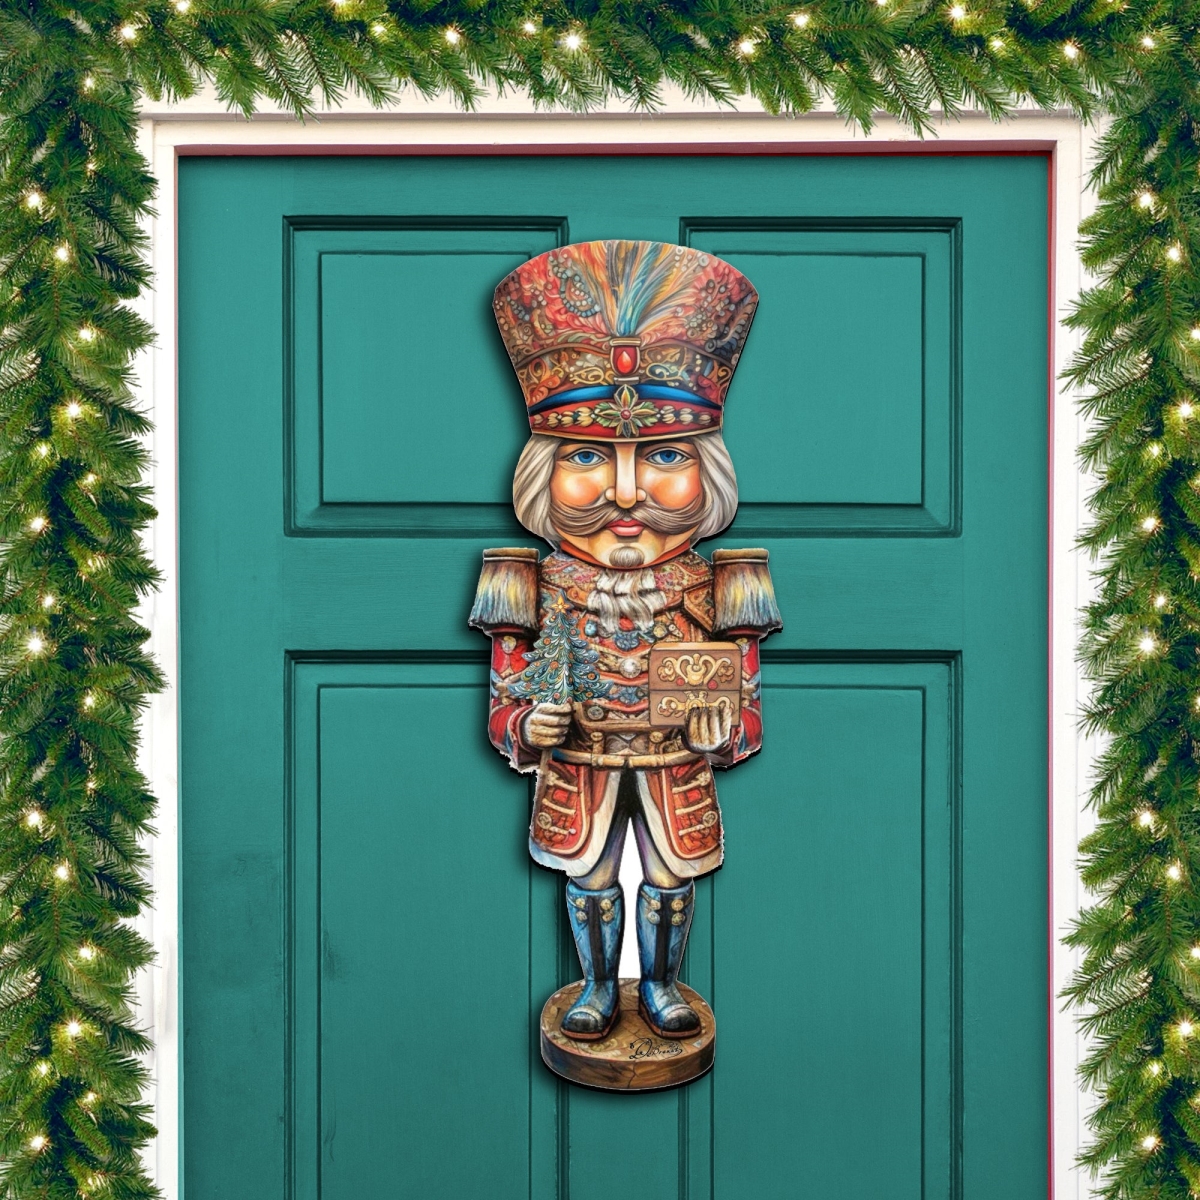 Clean Choice 24 x 18 in. Regal Nutcracker Prince Holiday Christmas Door Decor